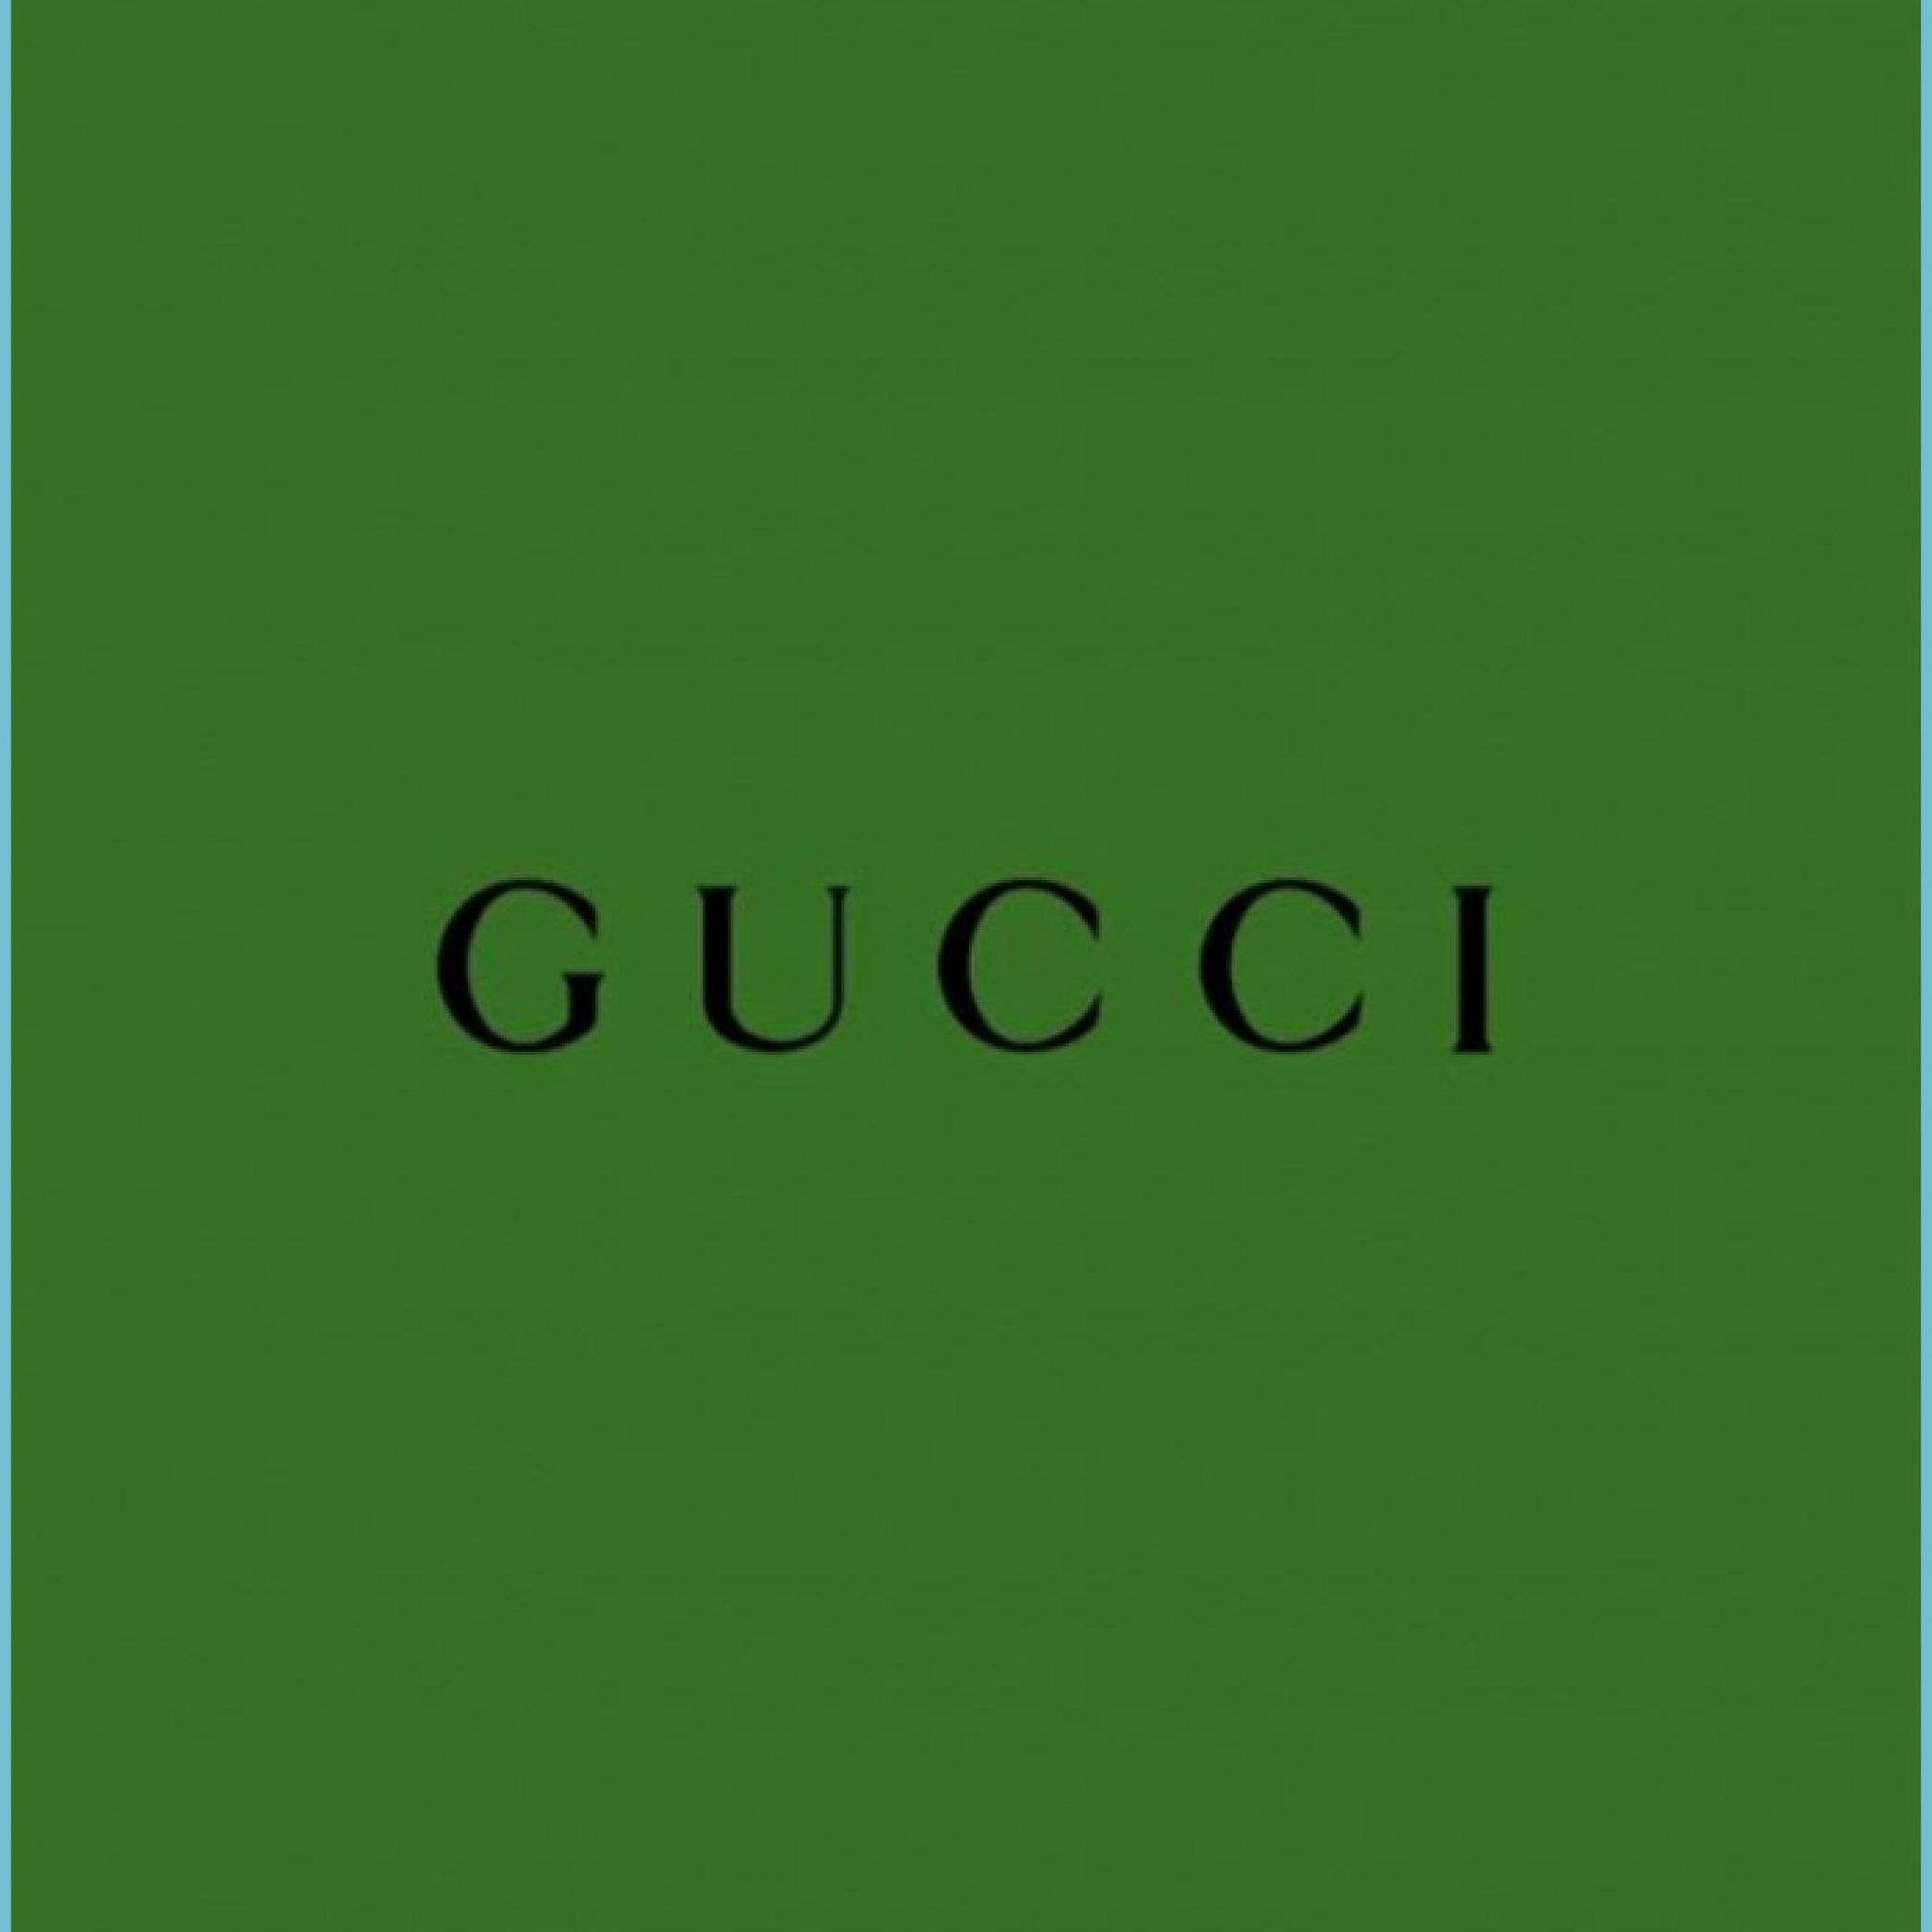 wallpaper #tumblr #aesthetics #gucci #green Green aesthetic aesthetic wallpaper